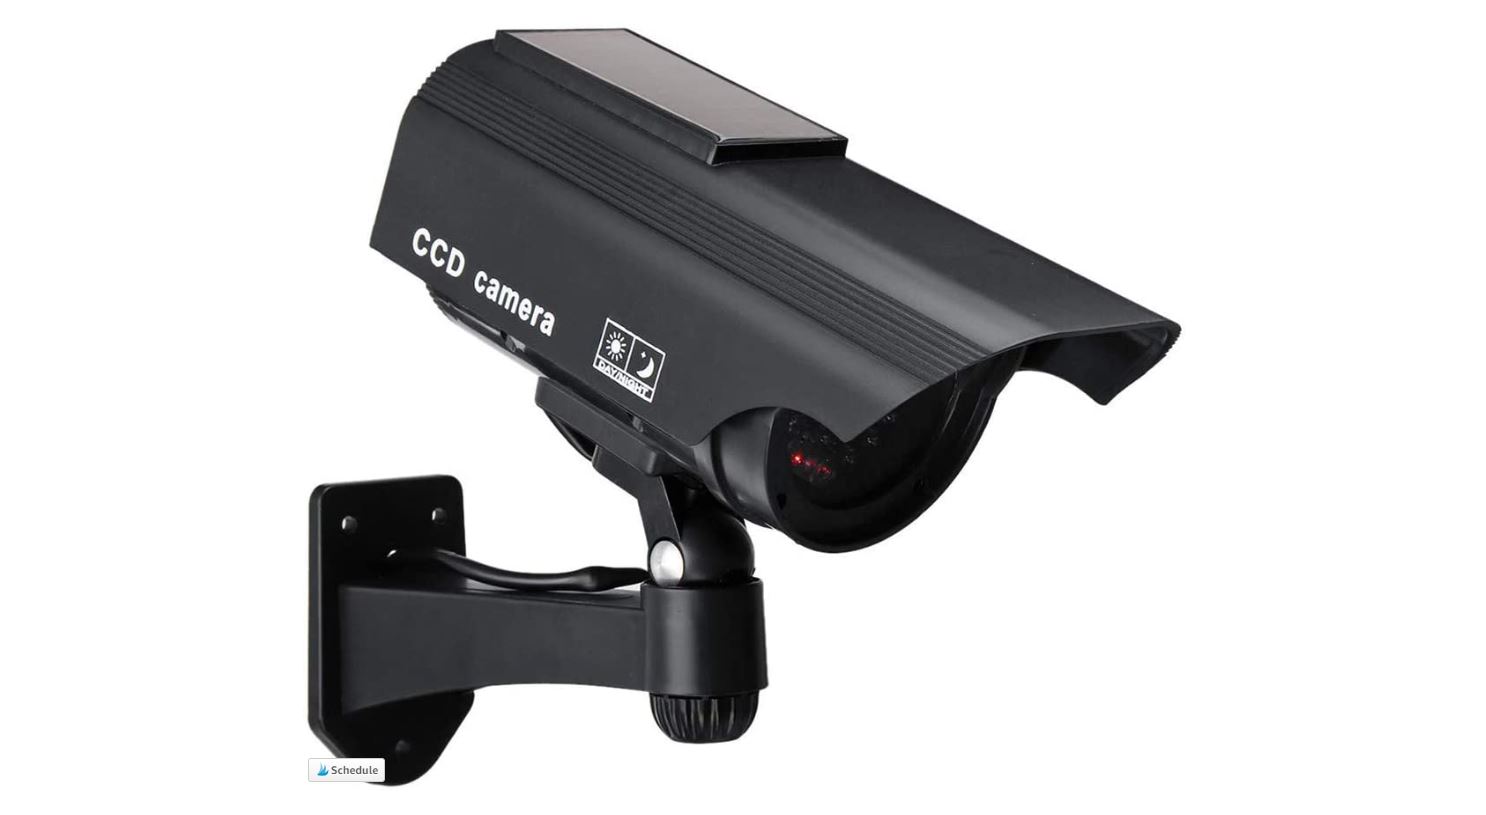 inexpensive surveillance cameras